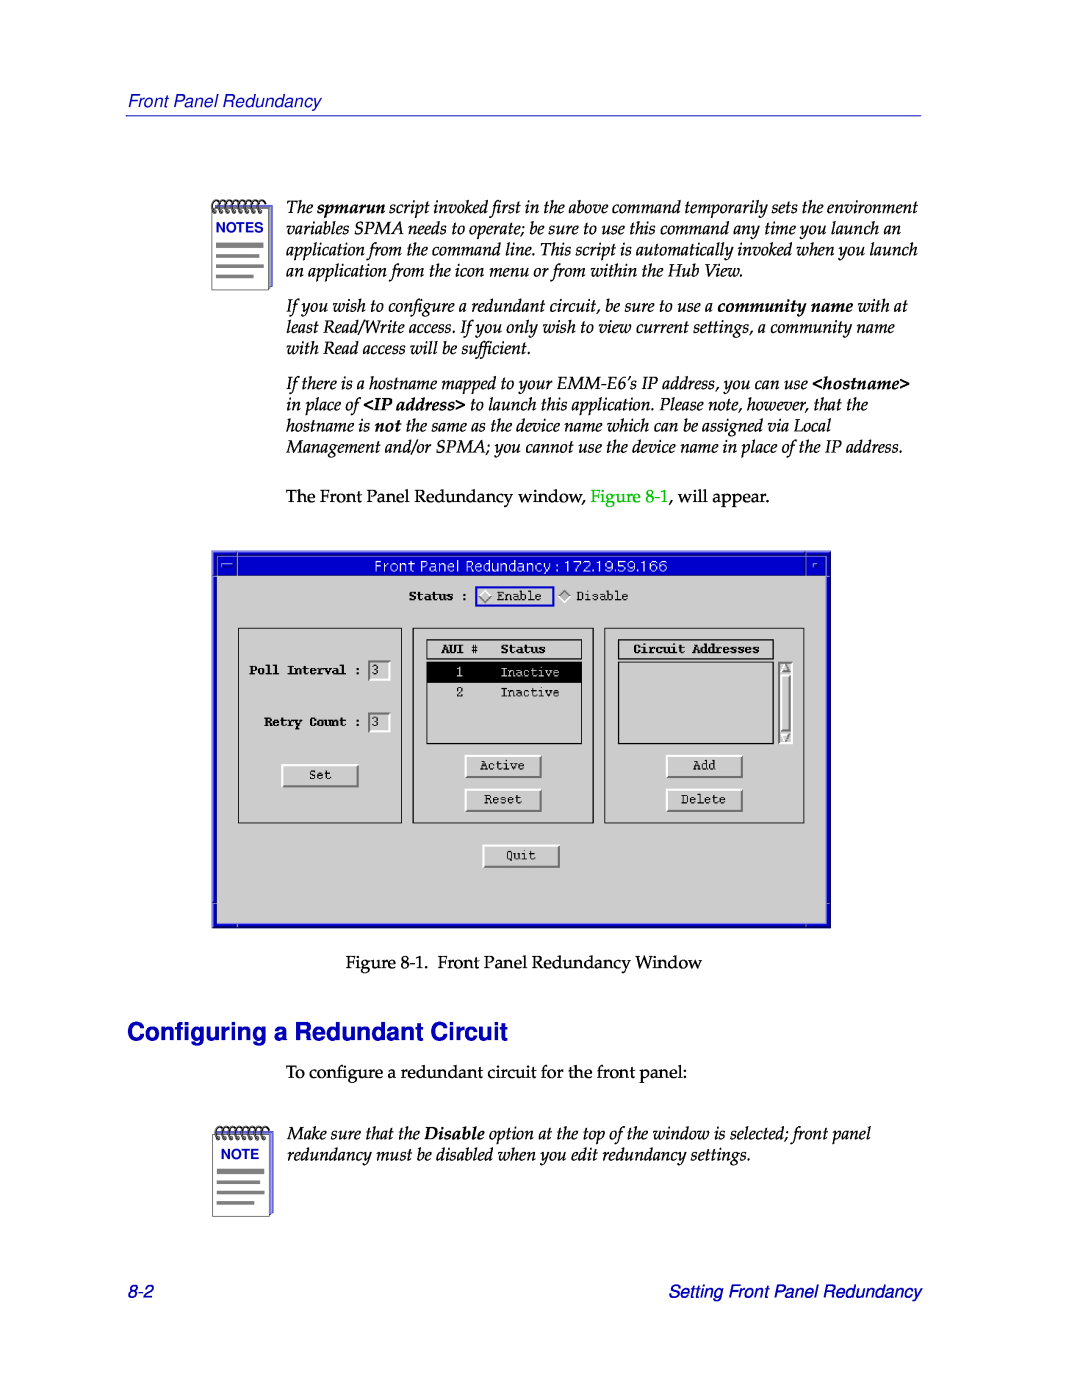 Cabletron Systems EMM-E6 manual Setting Front Panel Redundancy, Conﬁguring a Redundant Circuit 